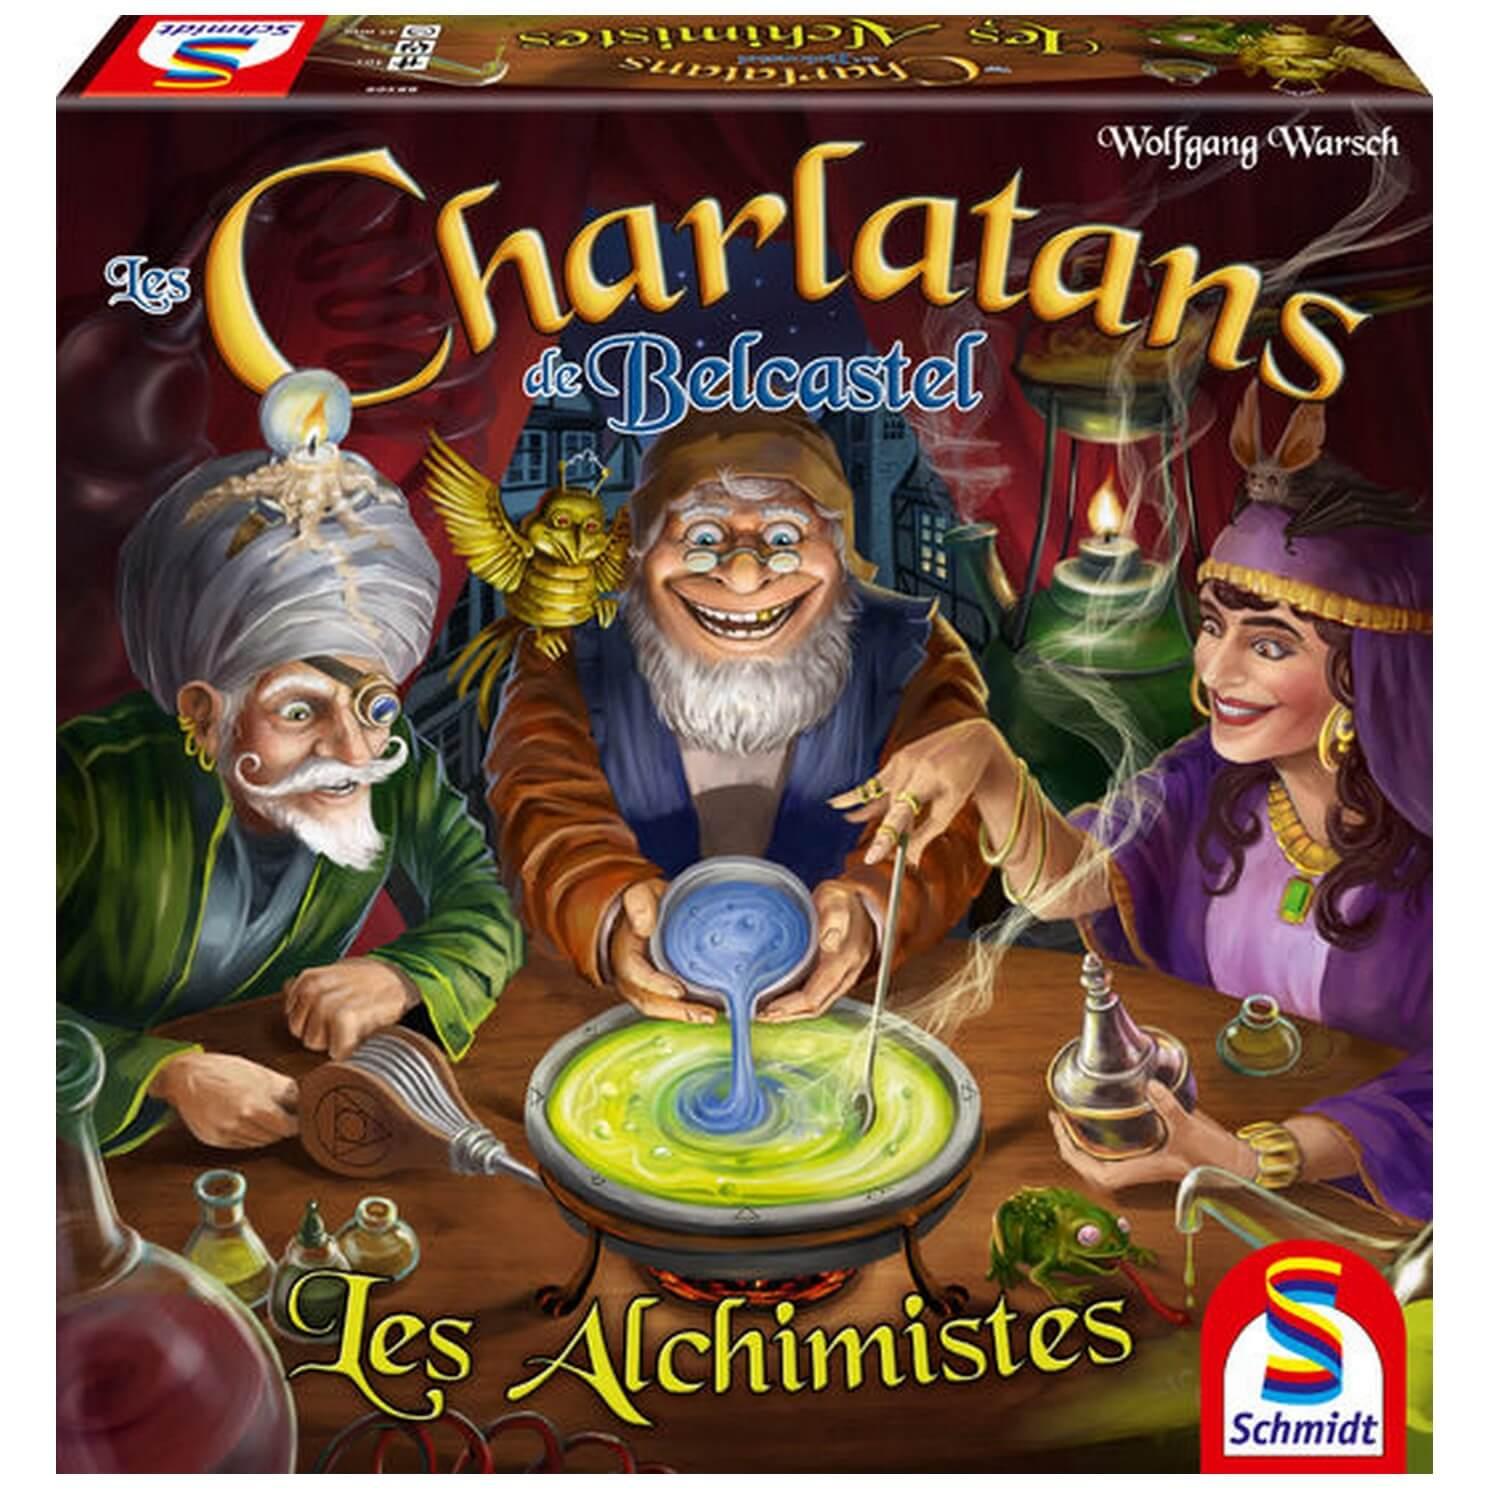 Les Charlatans de Belcastel : Extension : Les alchimistes